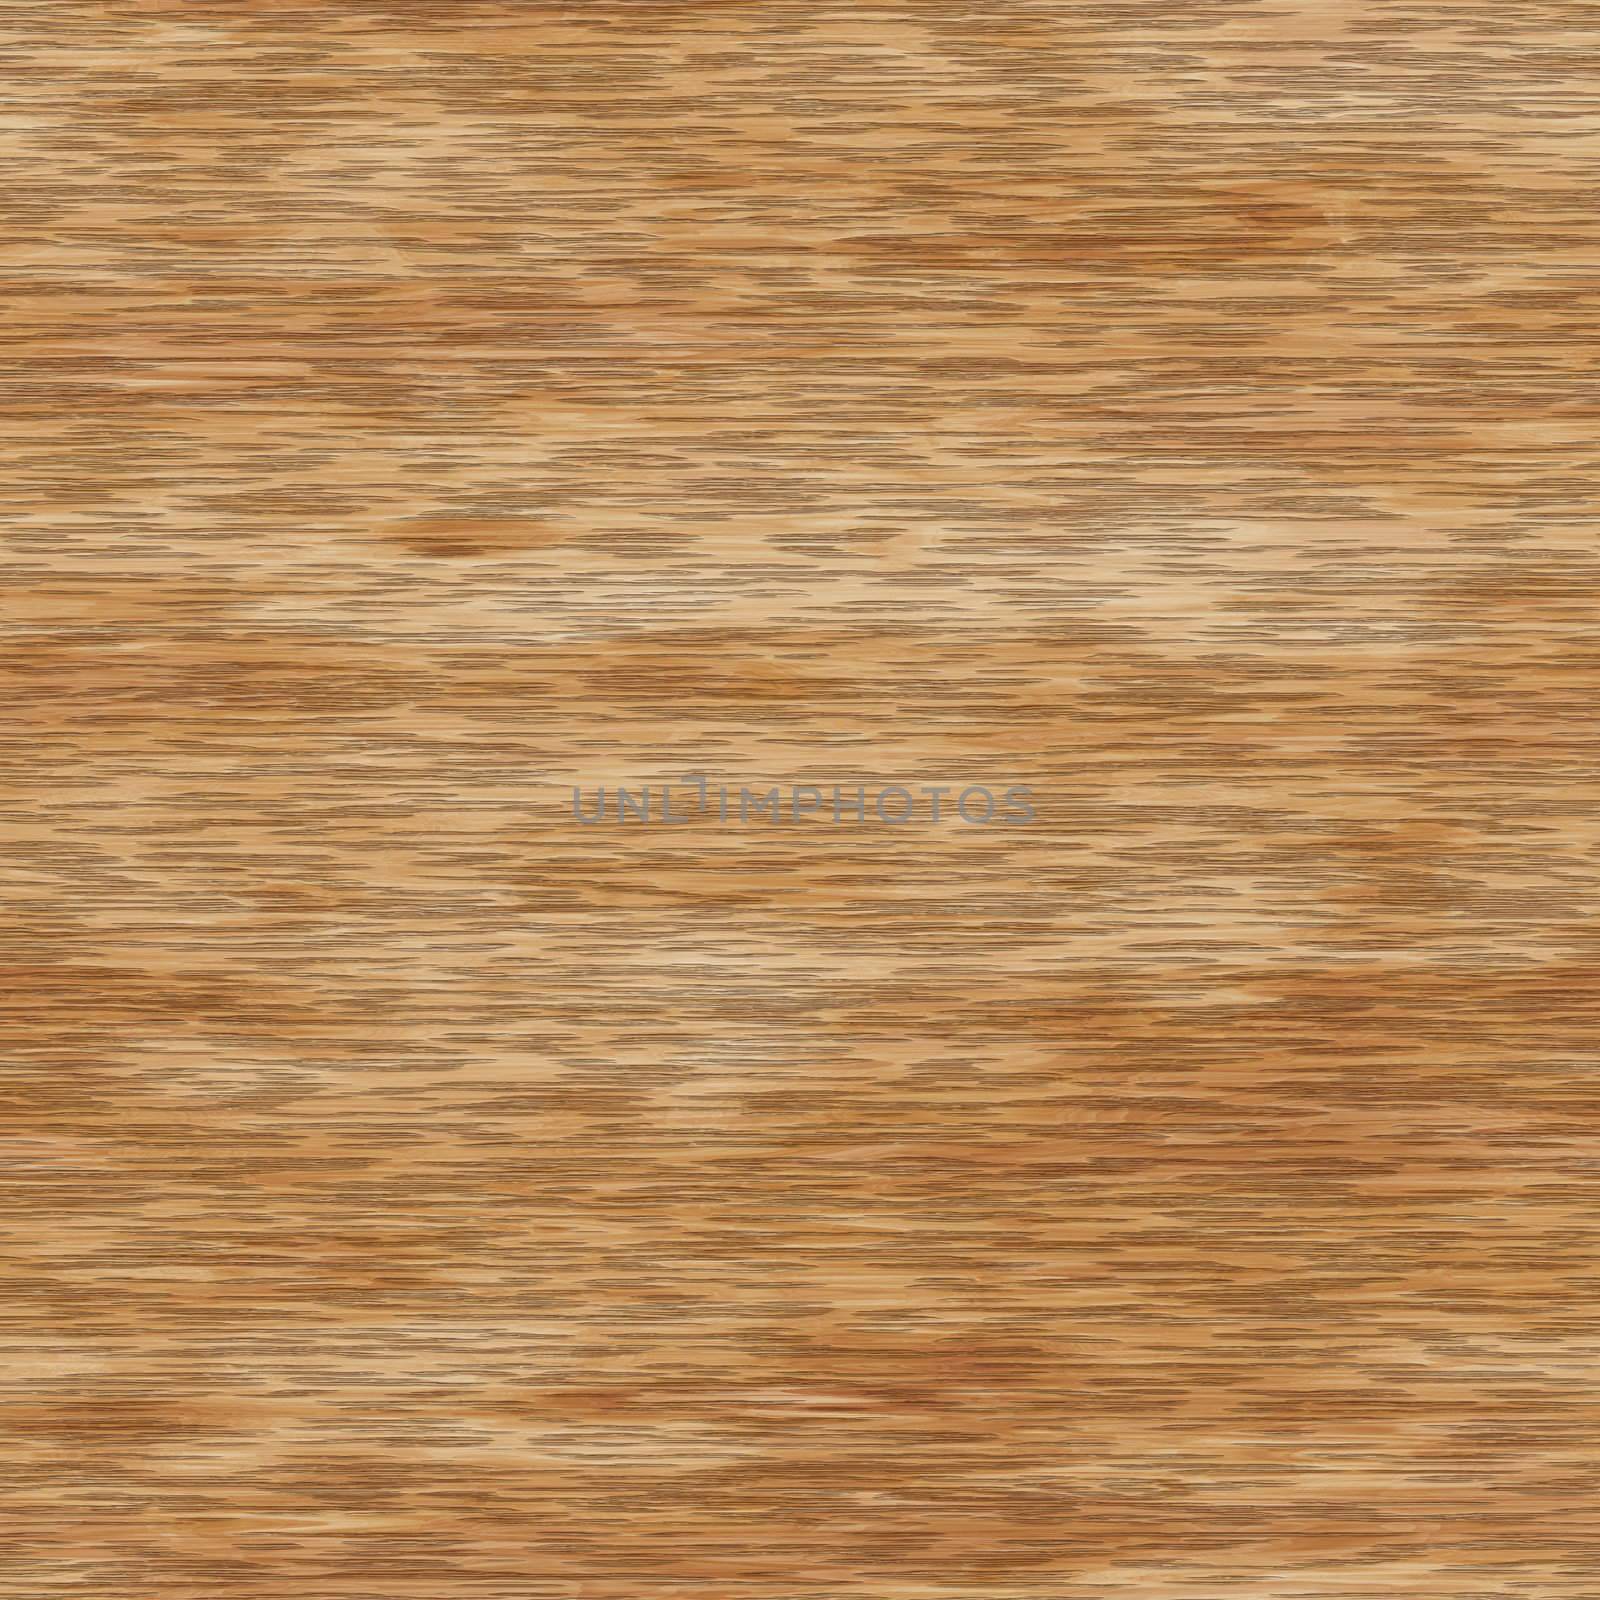 Seamless Wood Texture by kentoh